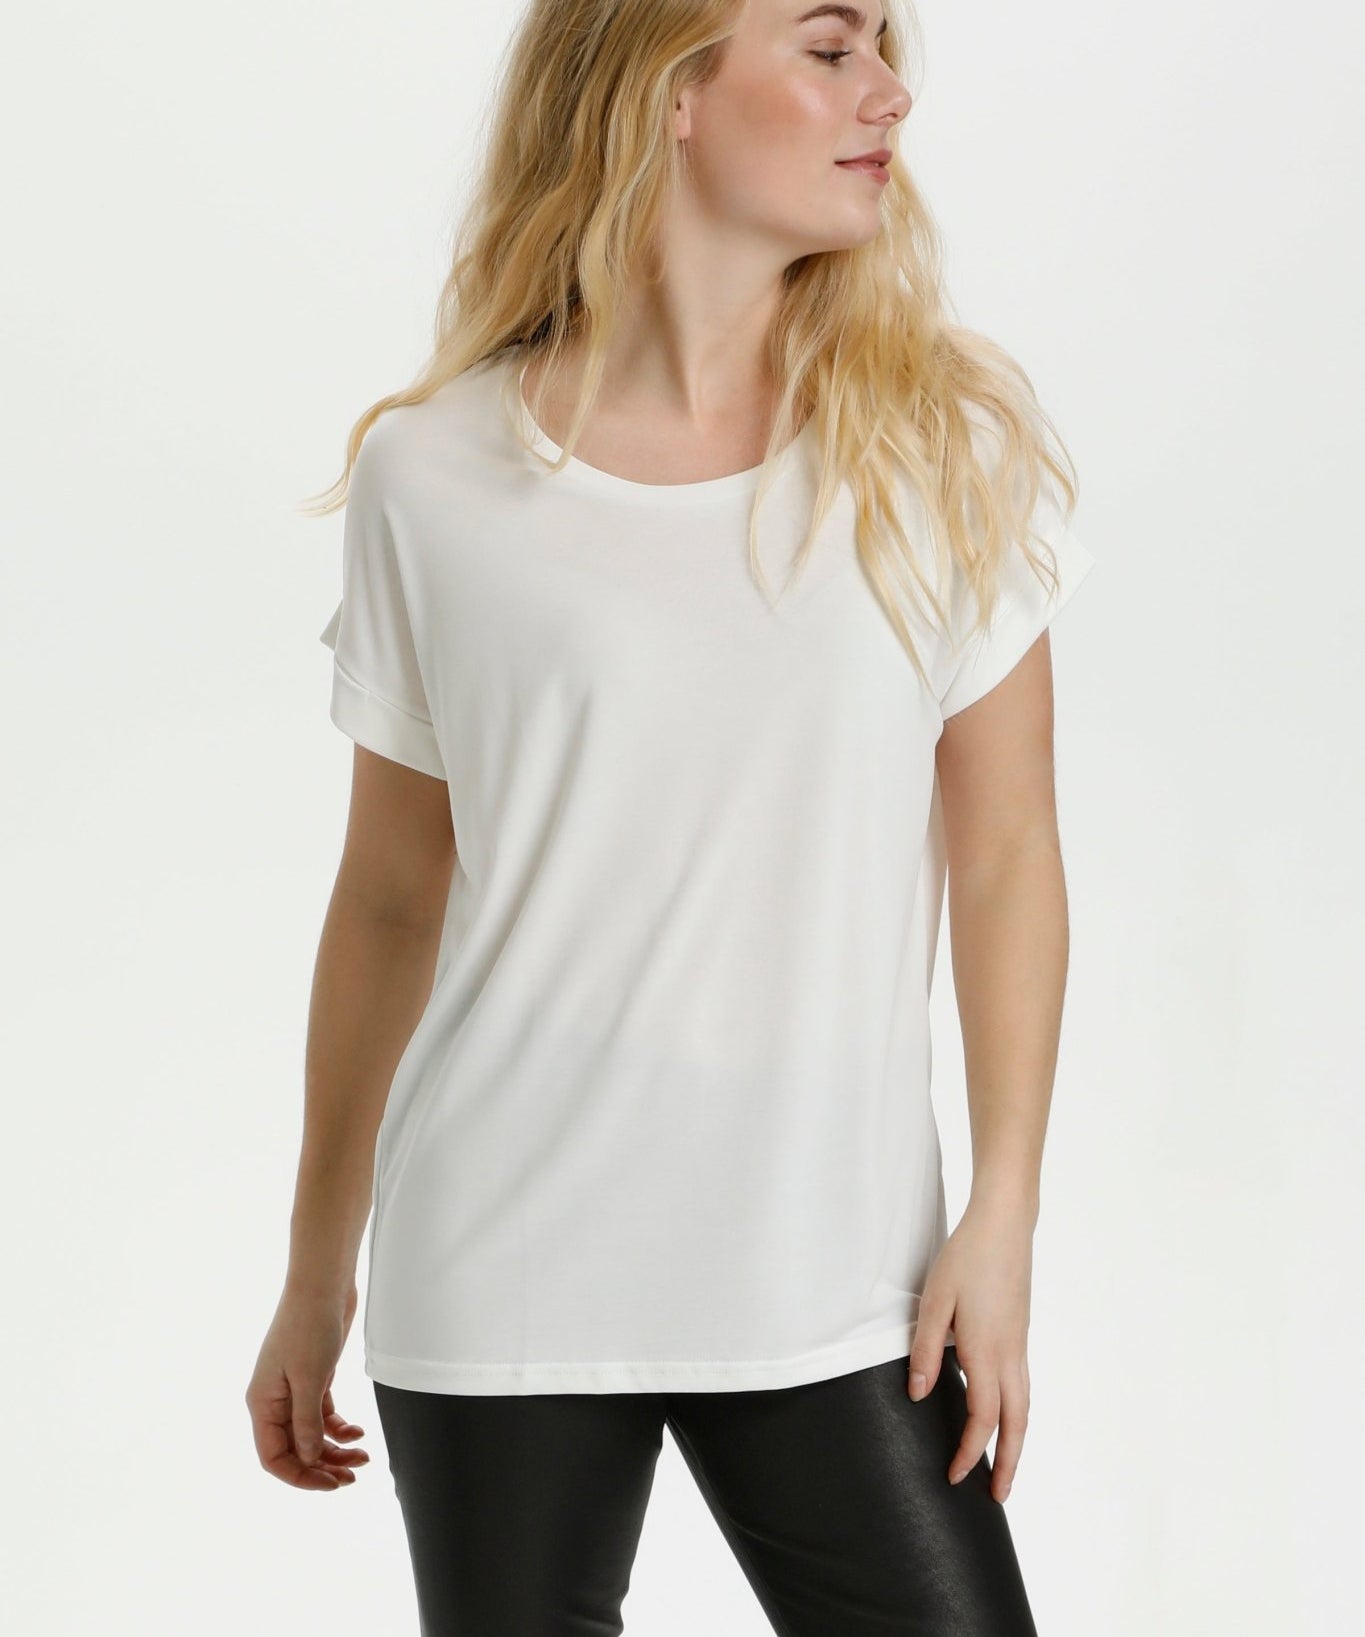 Kajsa T-shirt by Culture - gardenia white - Blue Sky Fashions & Lingerie